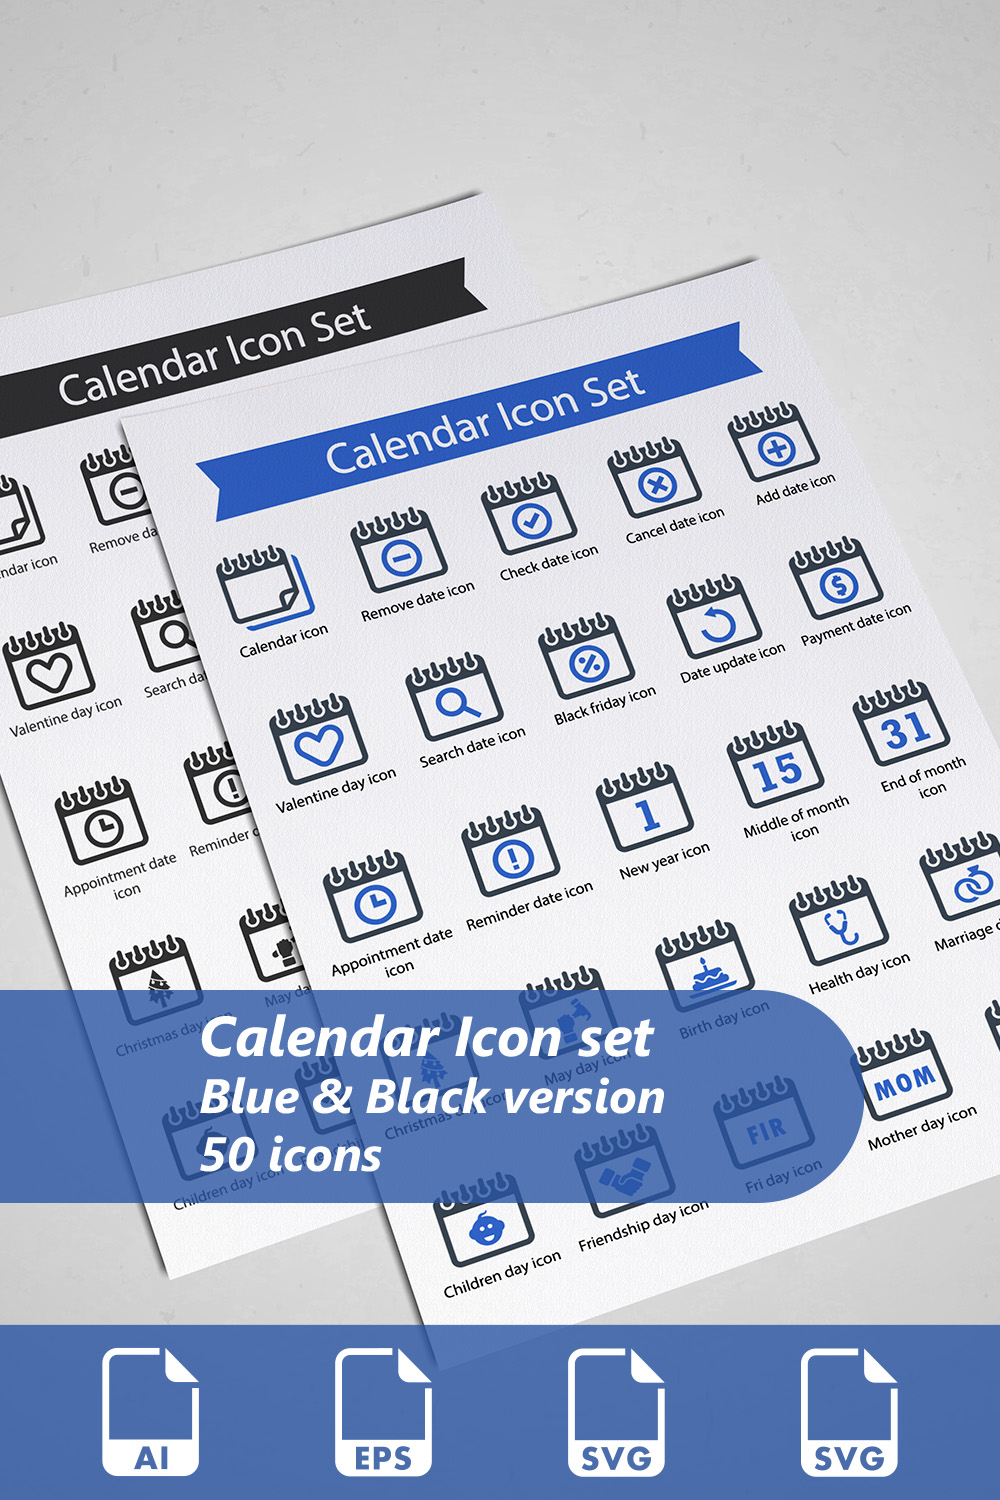 Calendar Icon Set pinterest preview image.